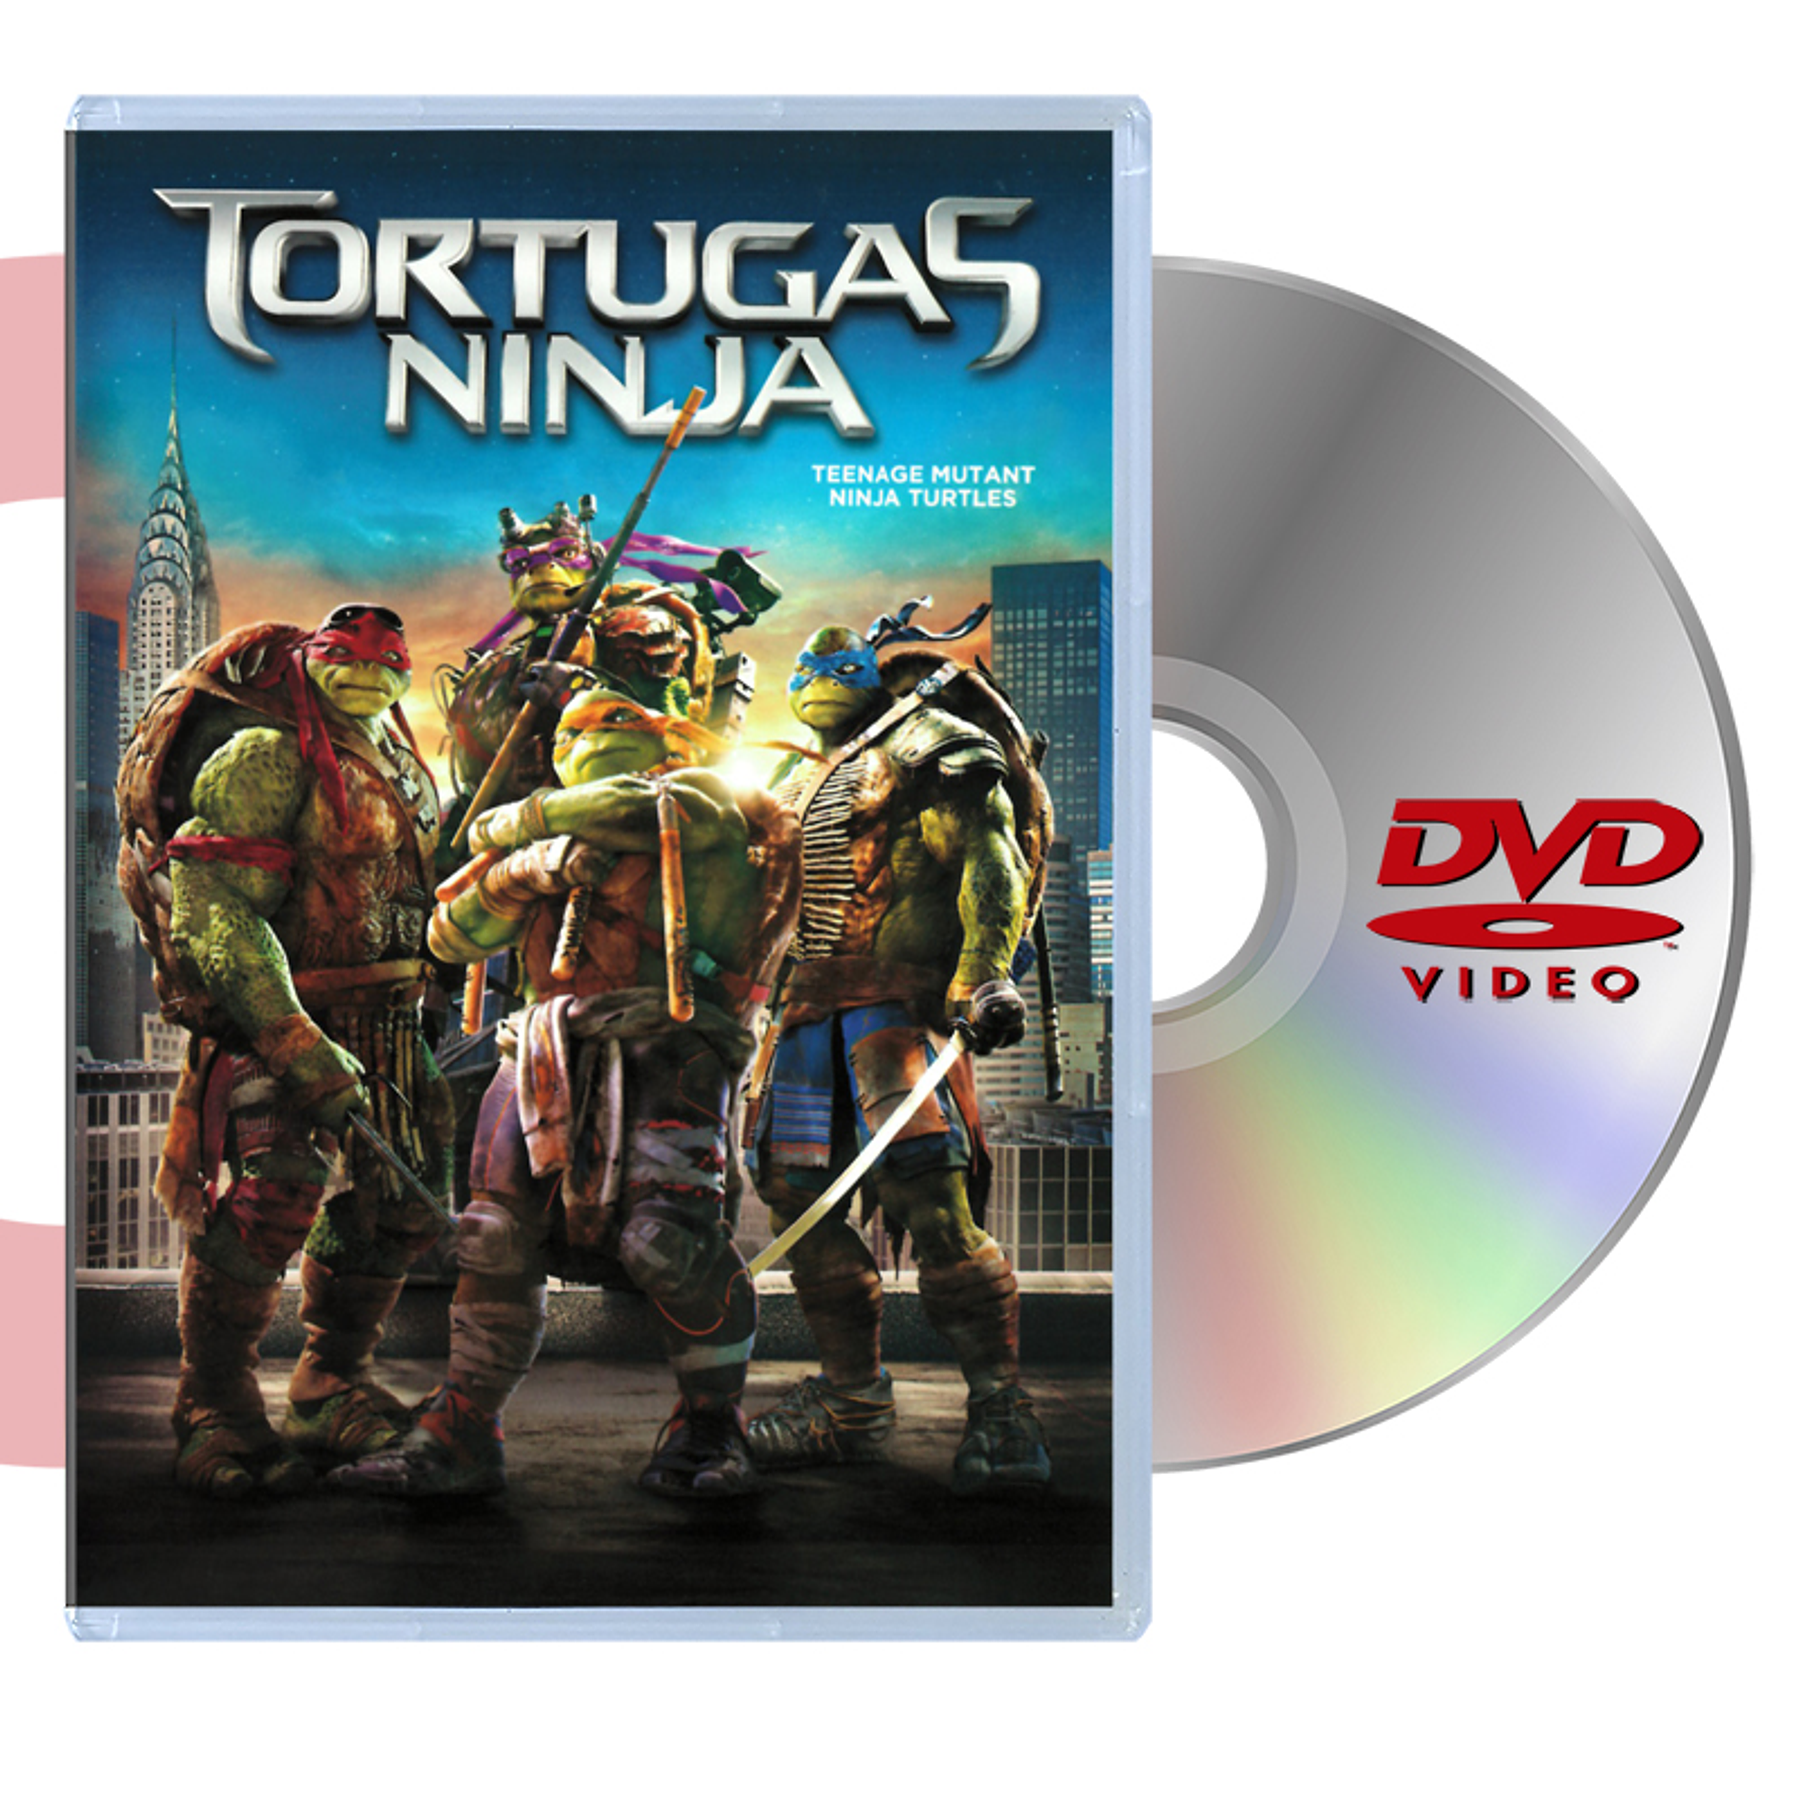 DVD Tortugas ninja